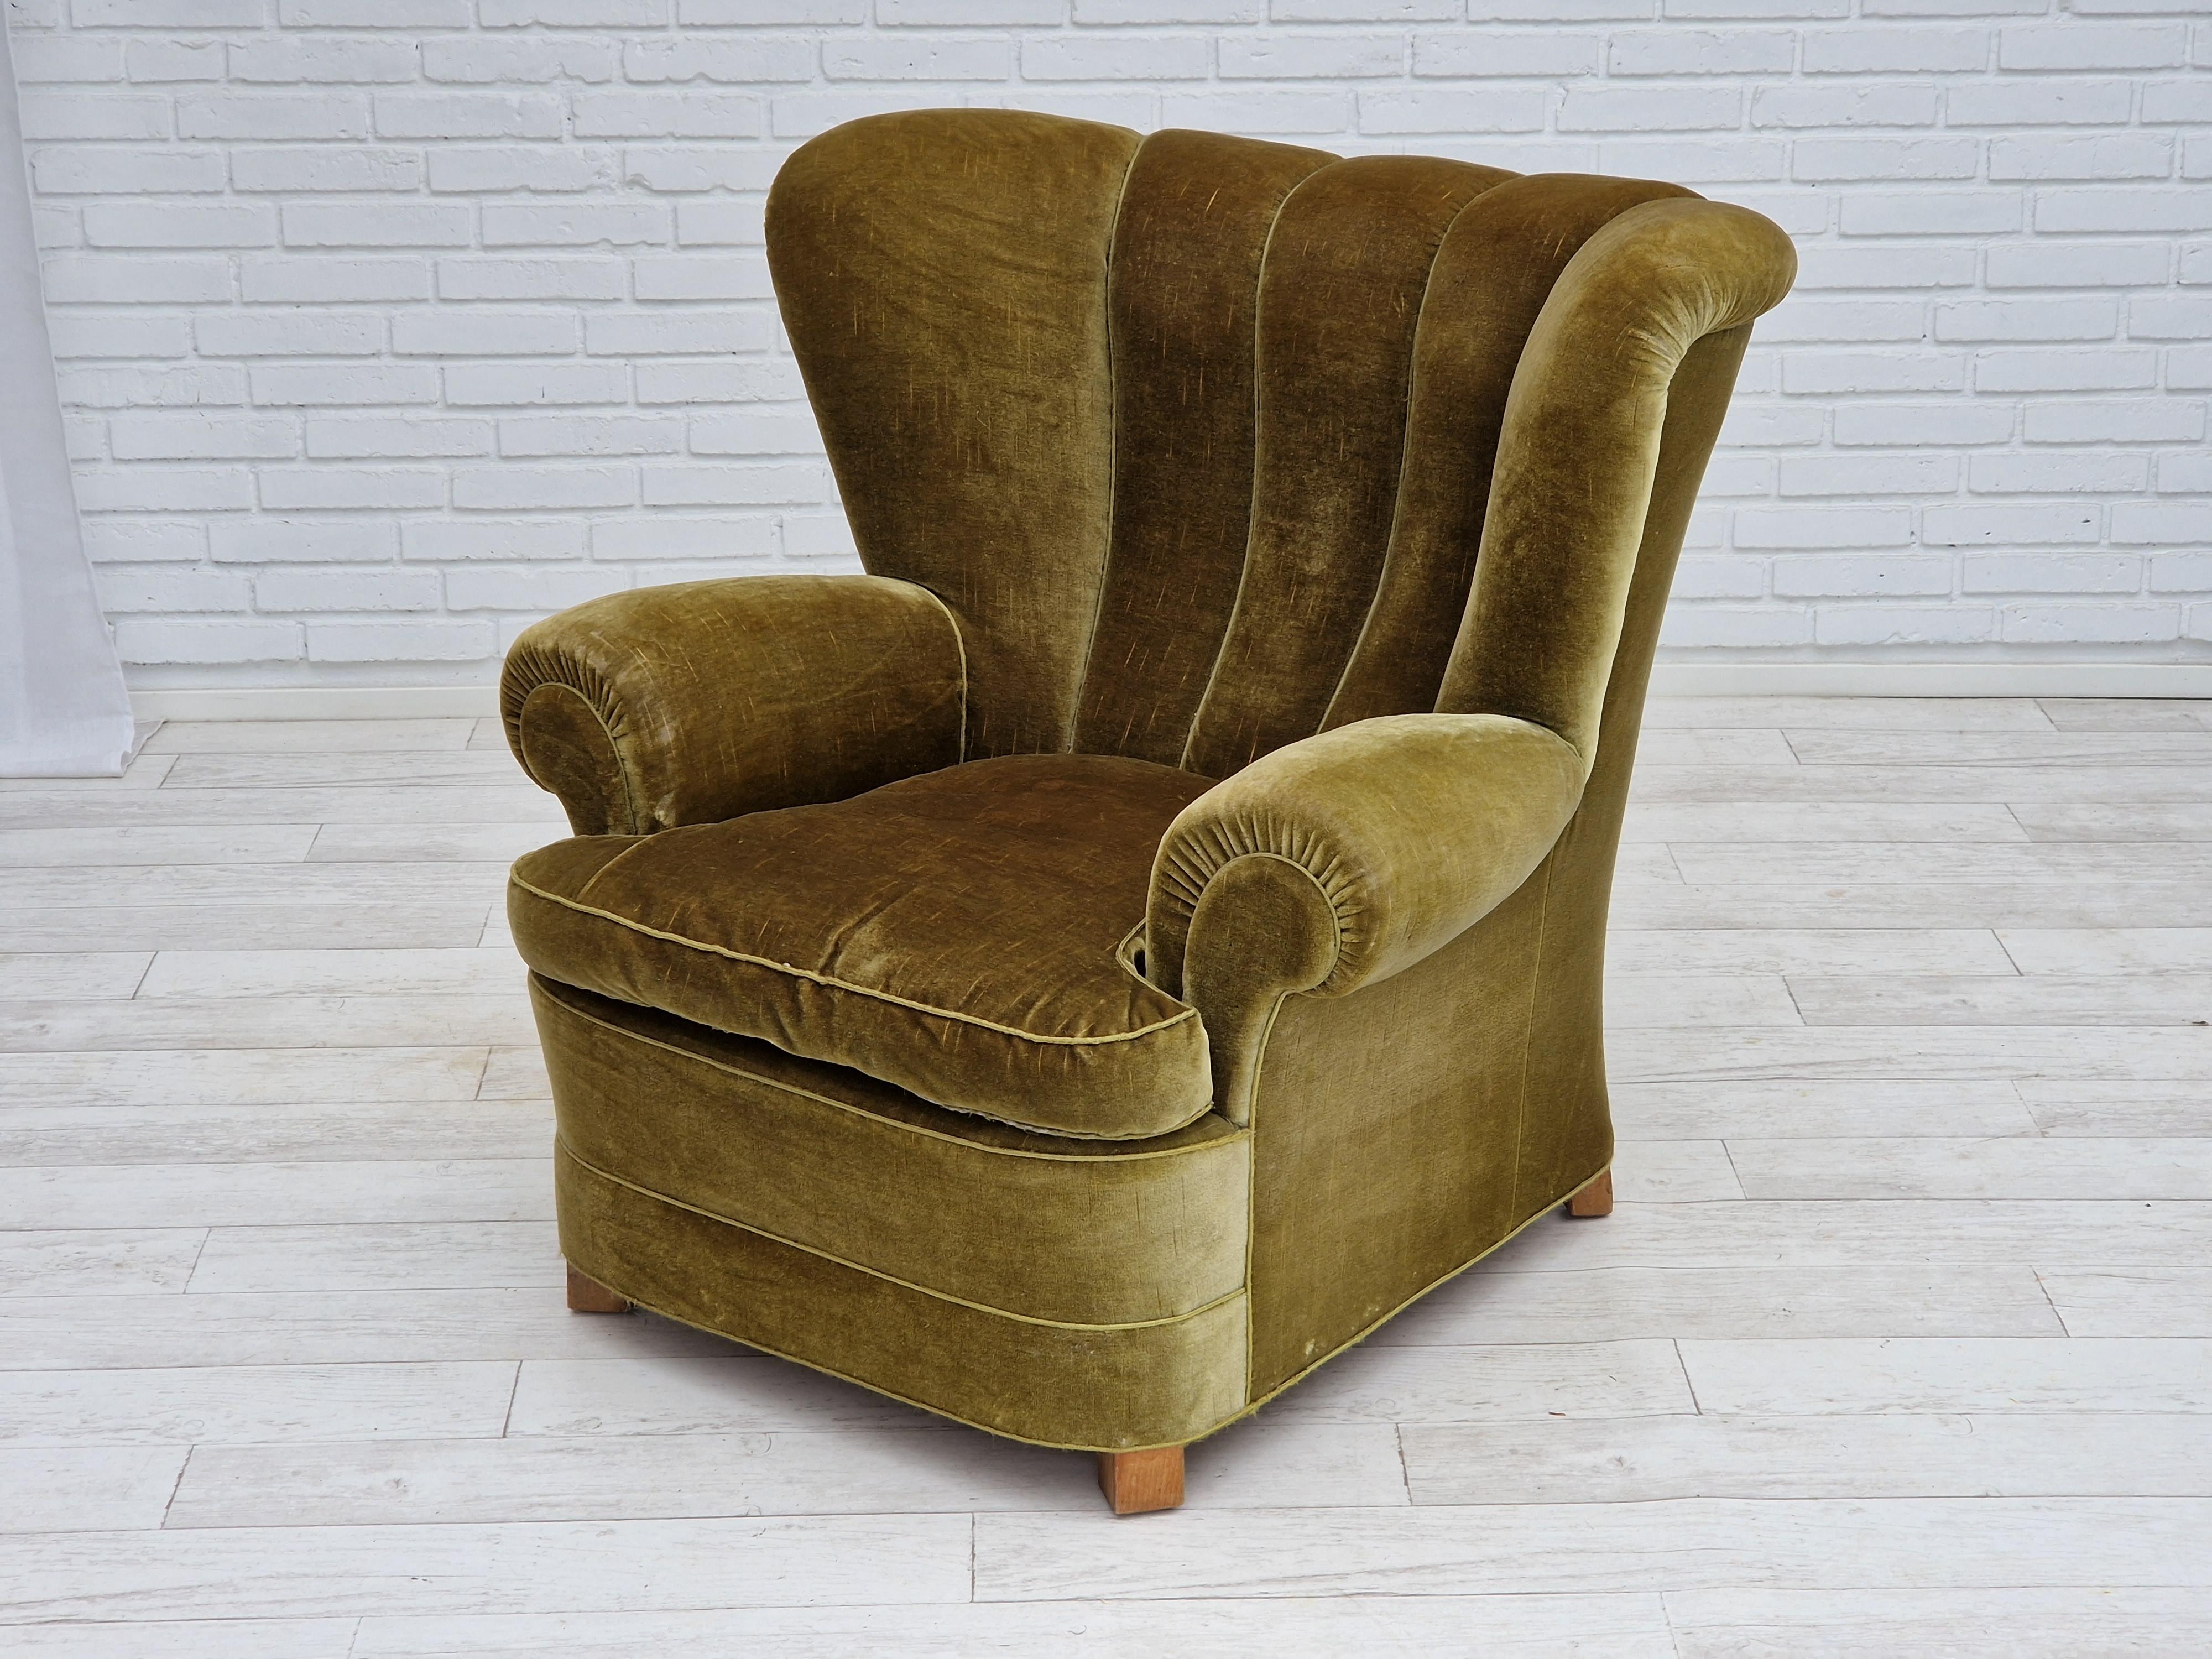 1960s, Vintage Danish Relax Chair, Original Condition 6